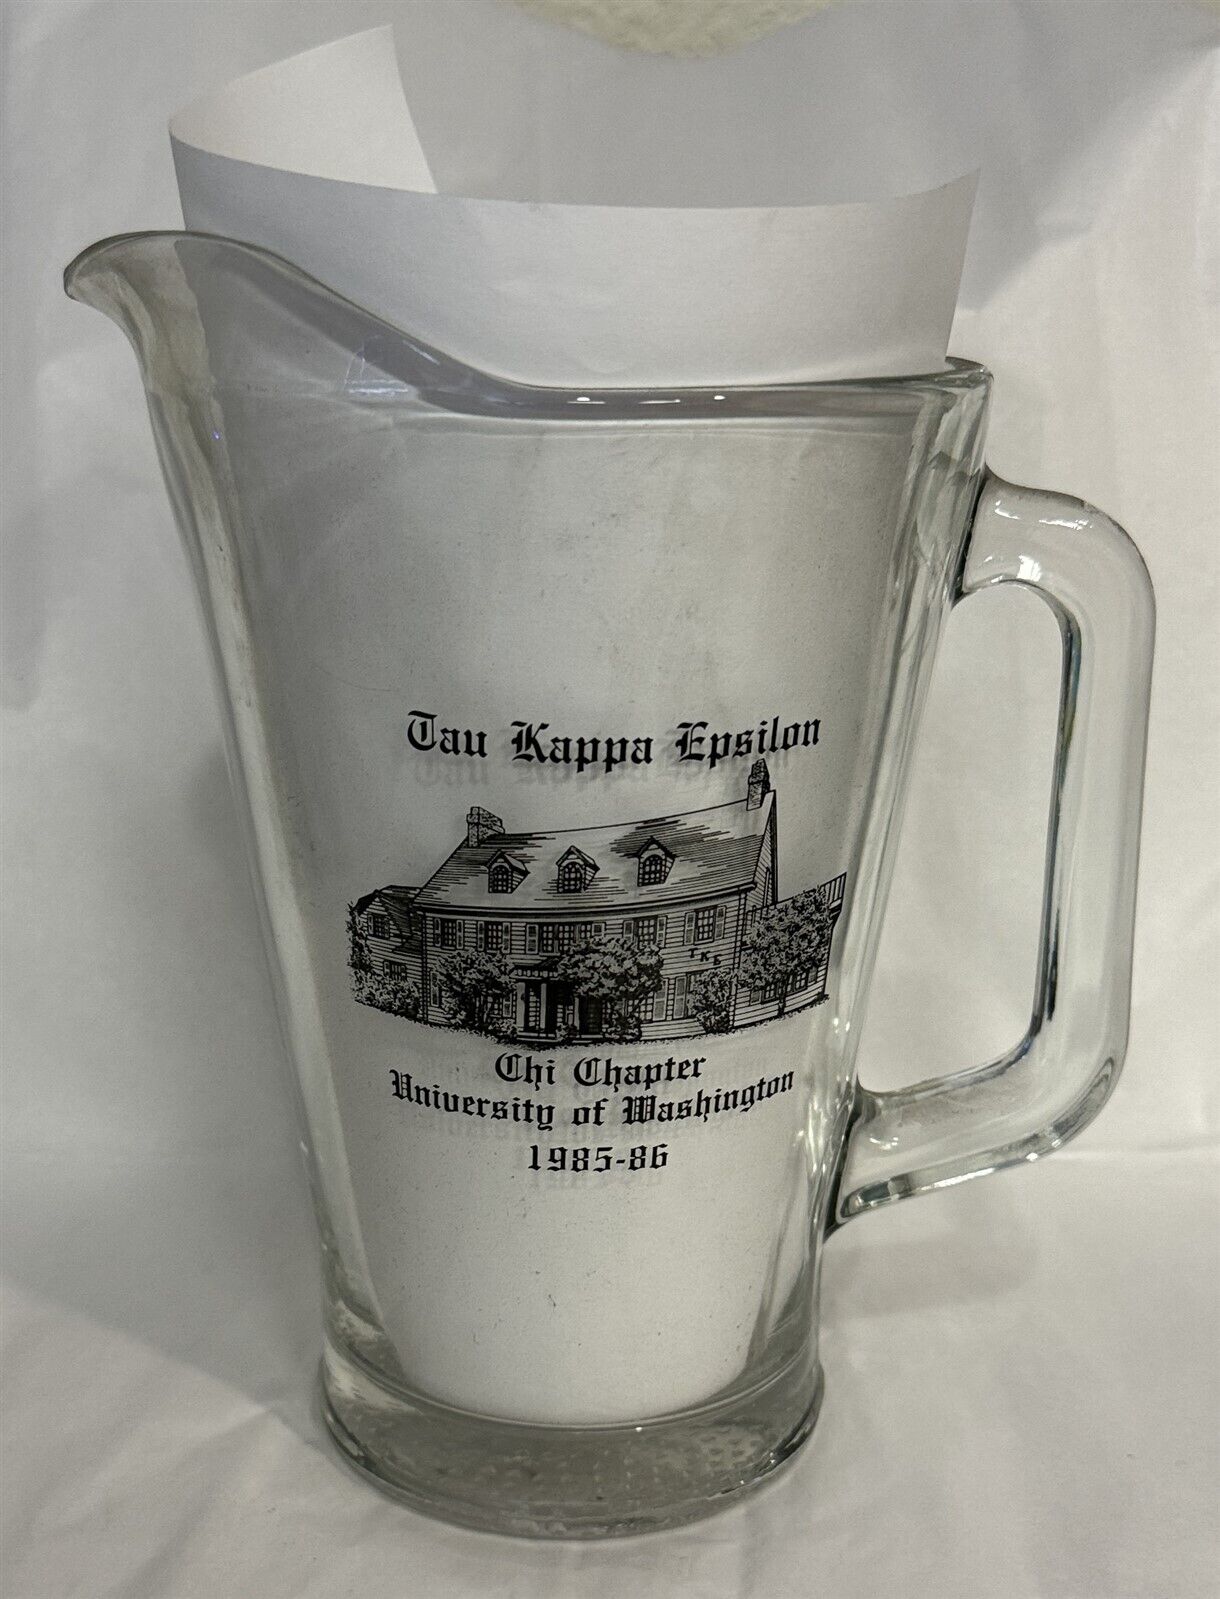 Vintage 1985-86 Tau Kappa Epsilon Chi Chapter Pitcher University of Washington